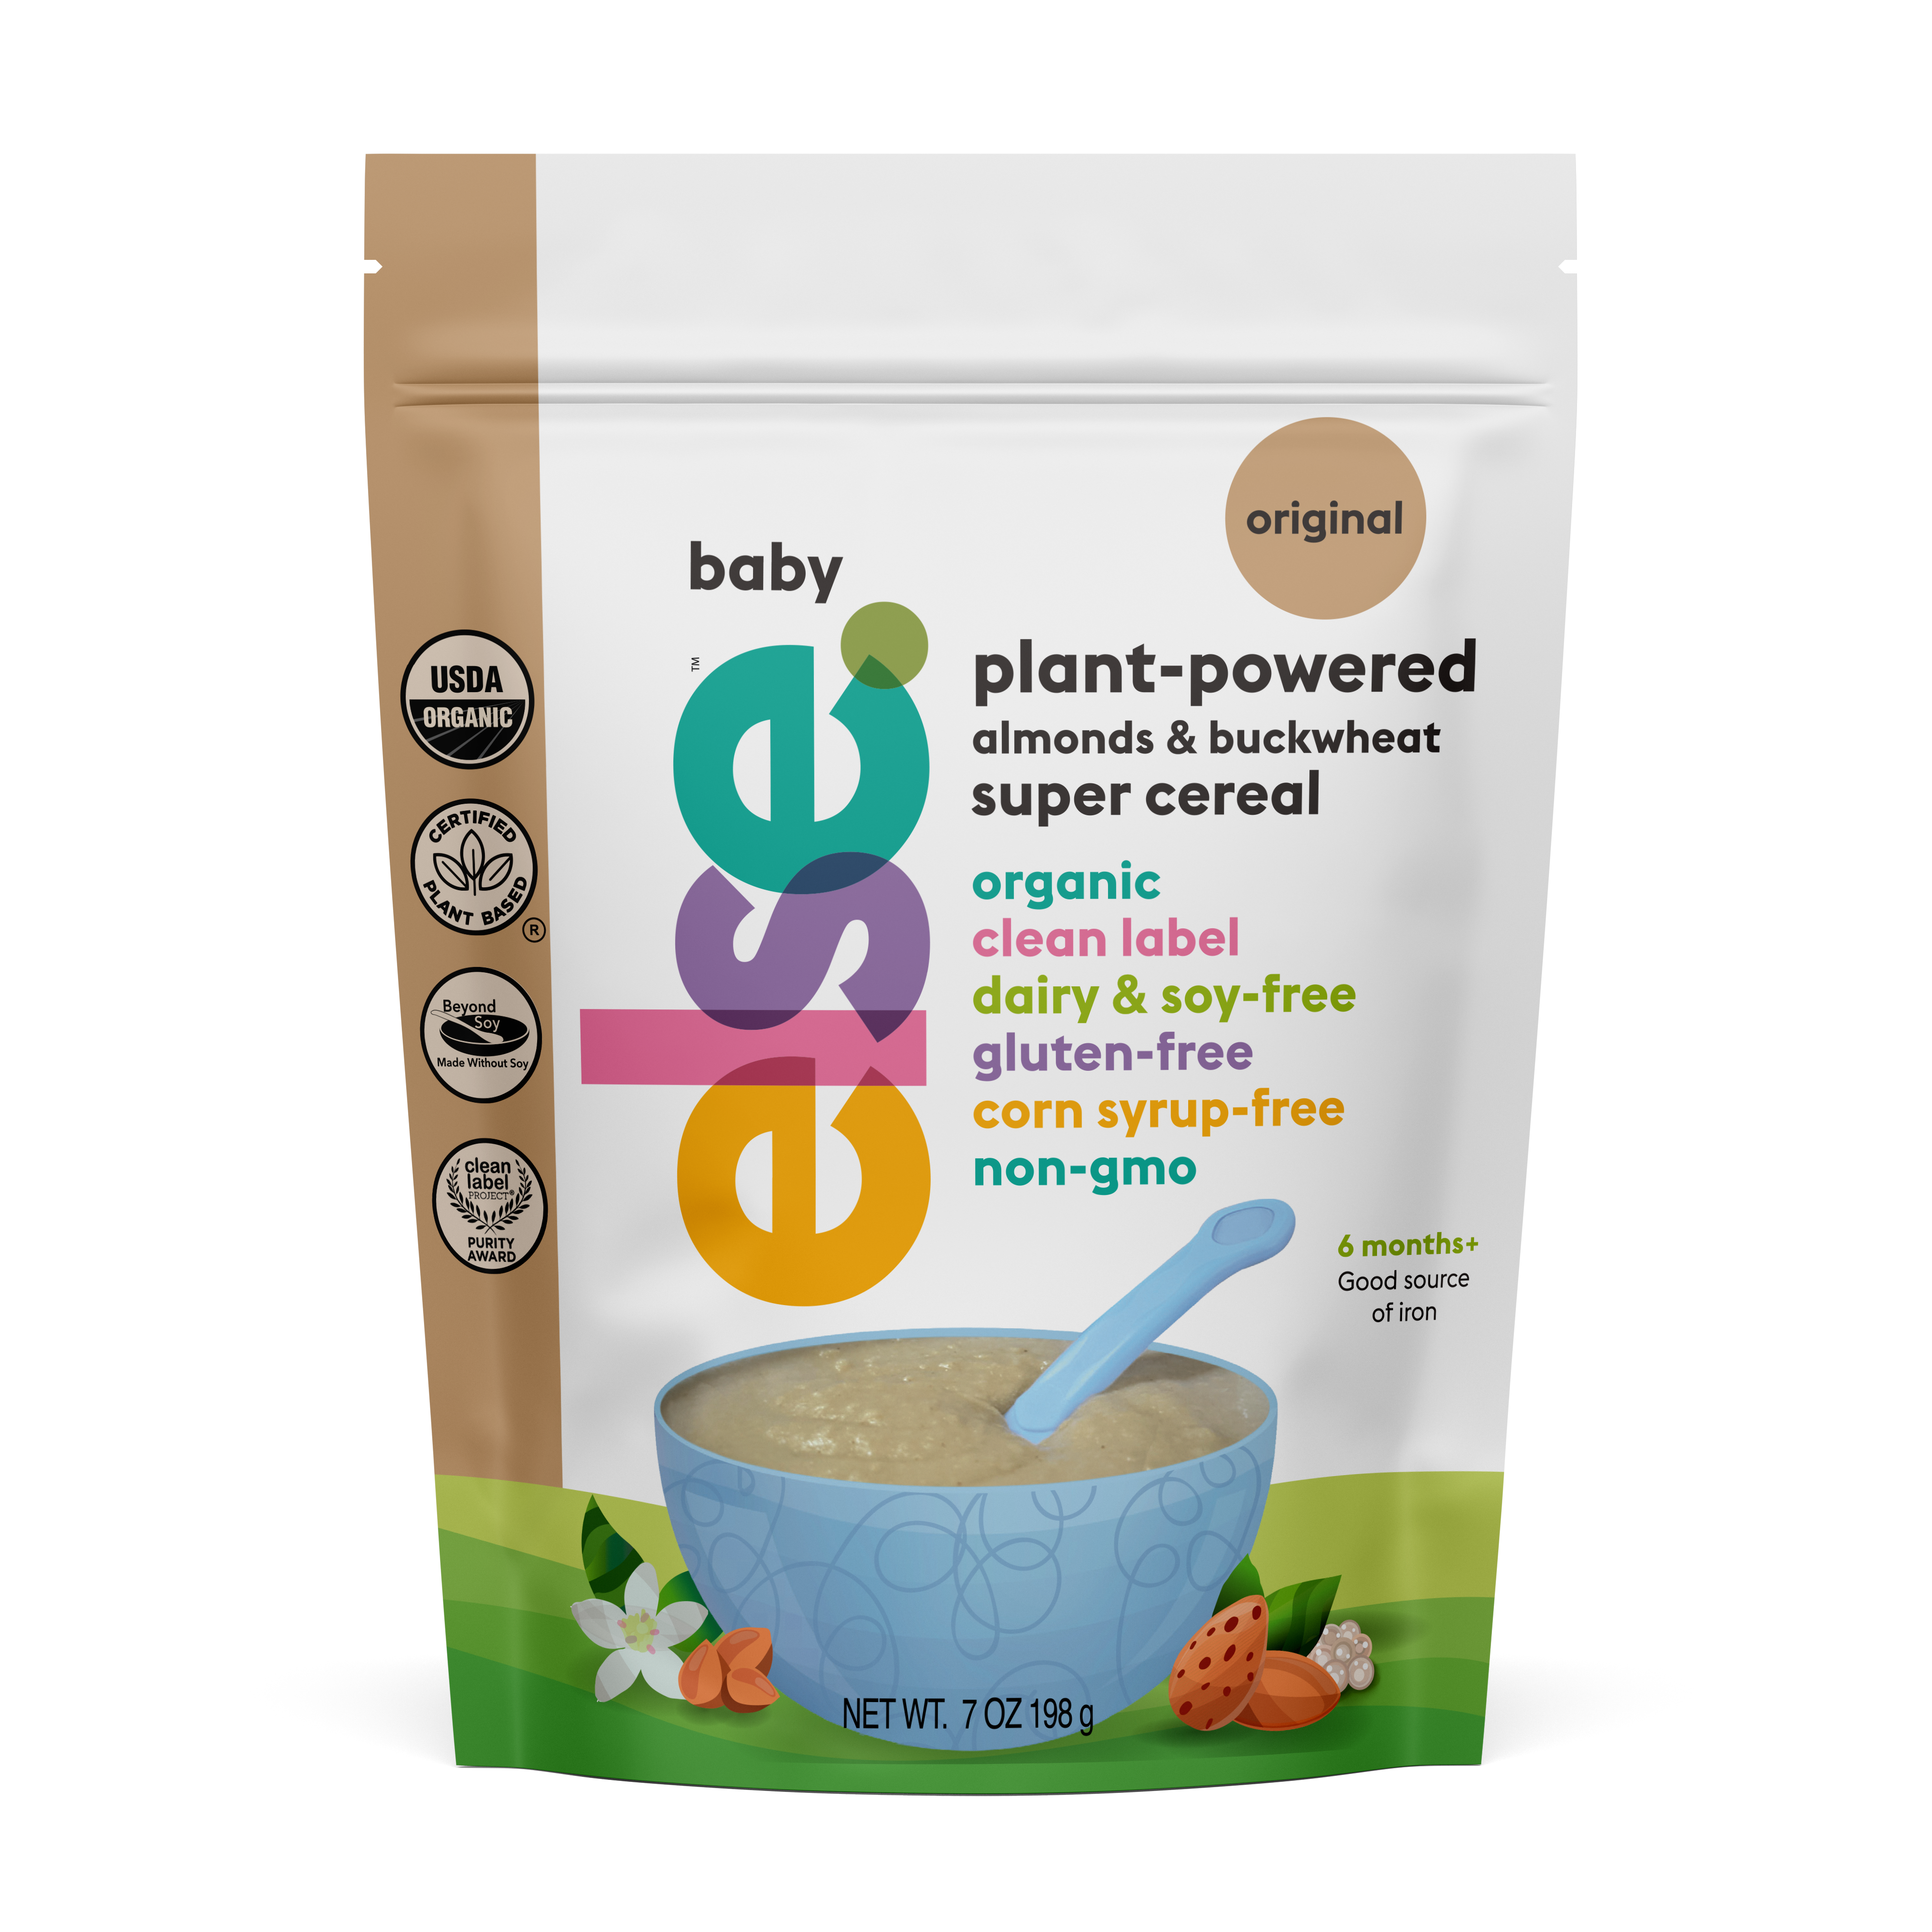 Else Baby Plant-Powered Almonds & Buckwheat Super Cereal, Original 12 units per case 7.0 oz